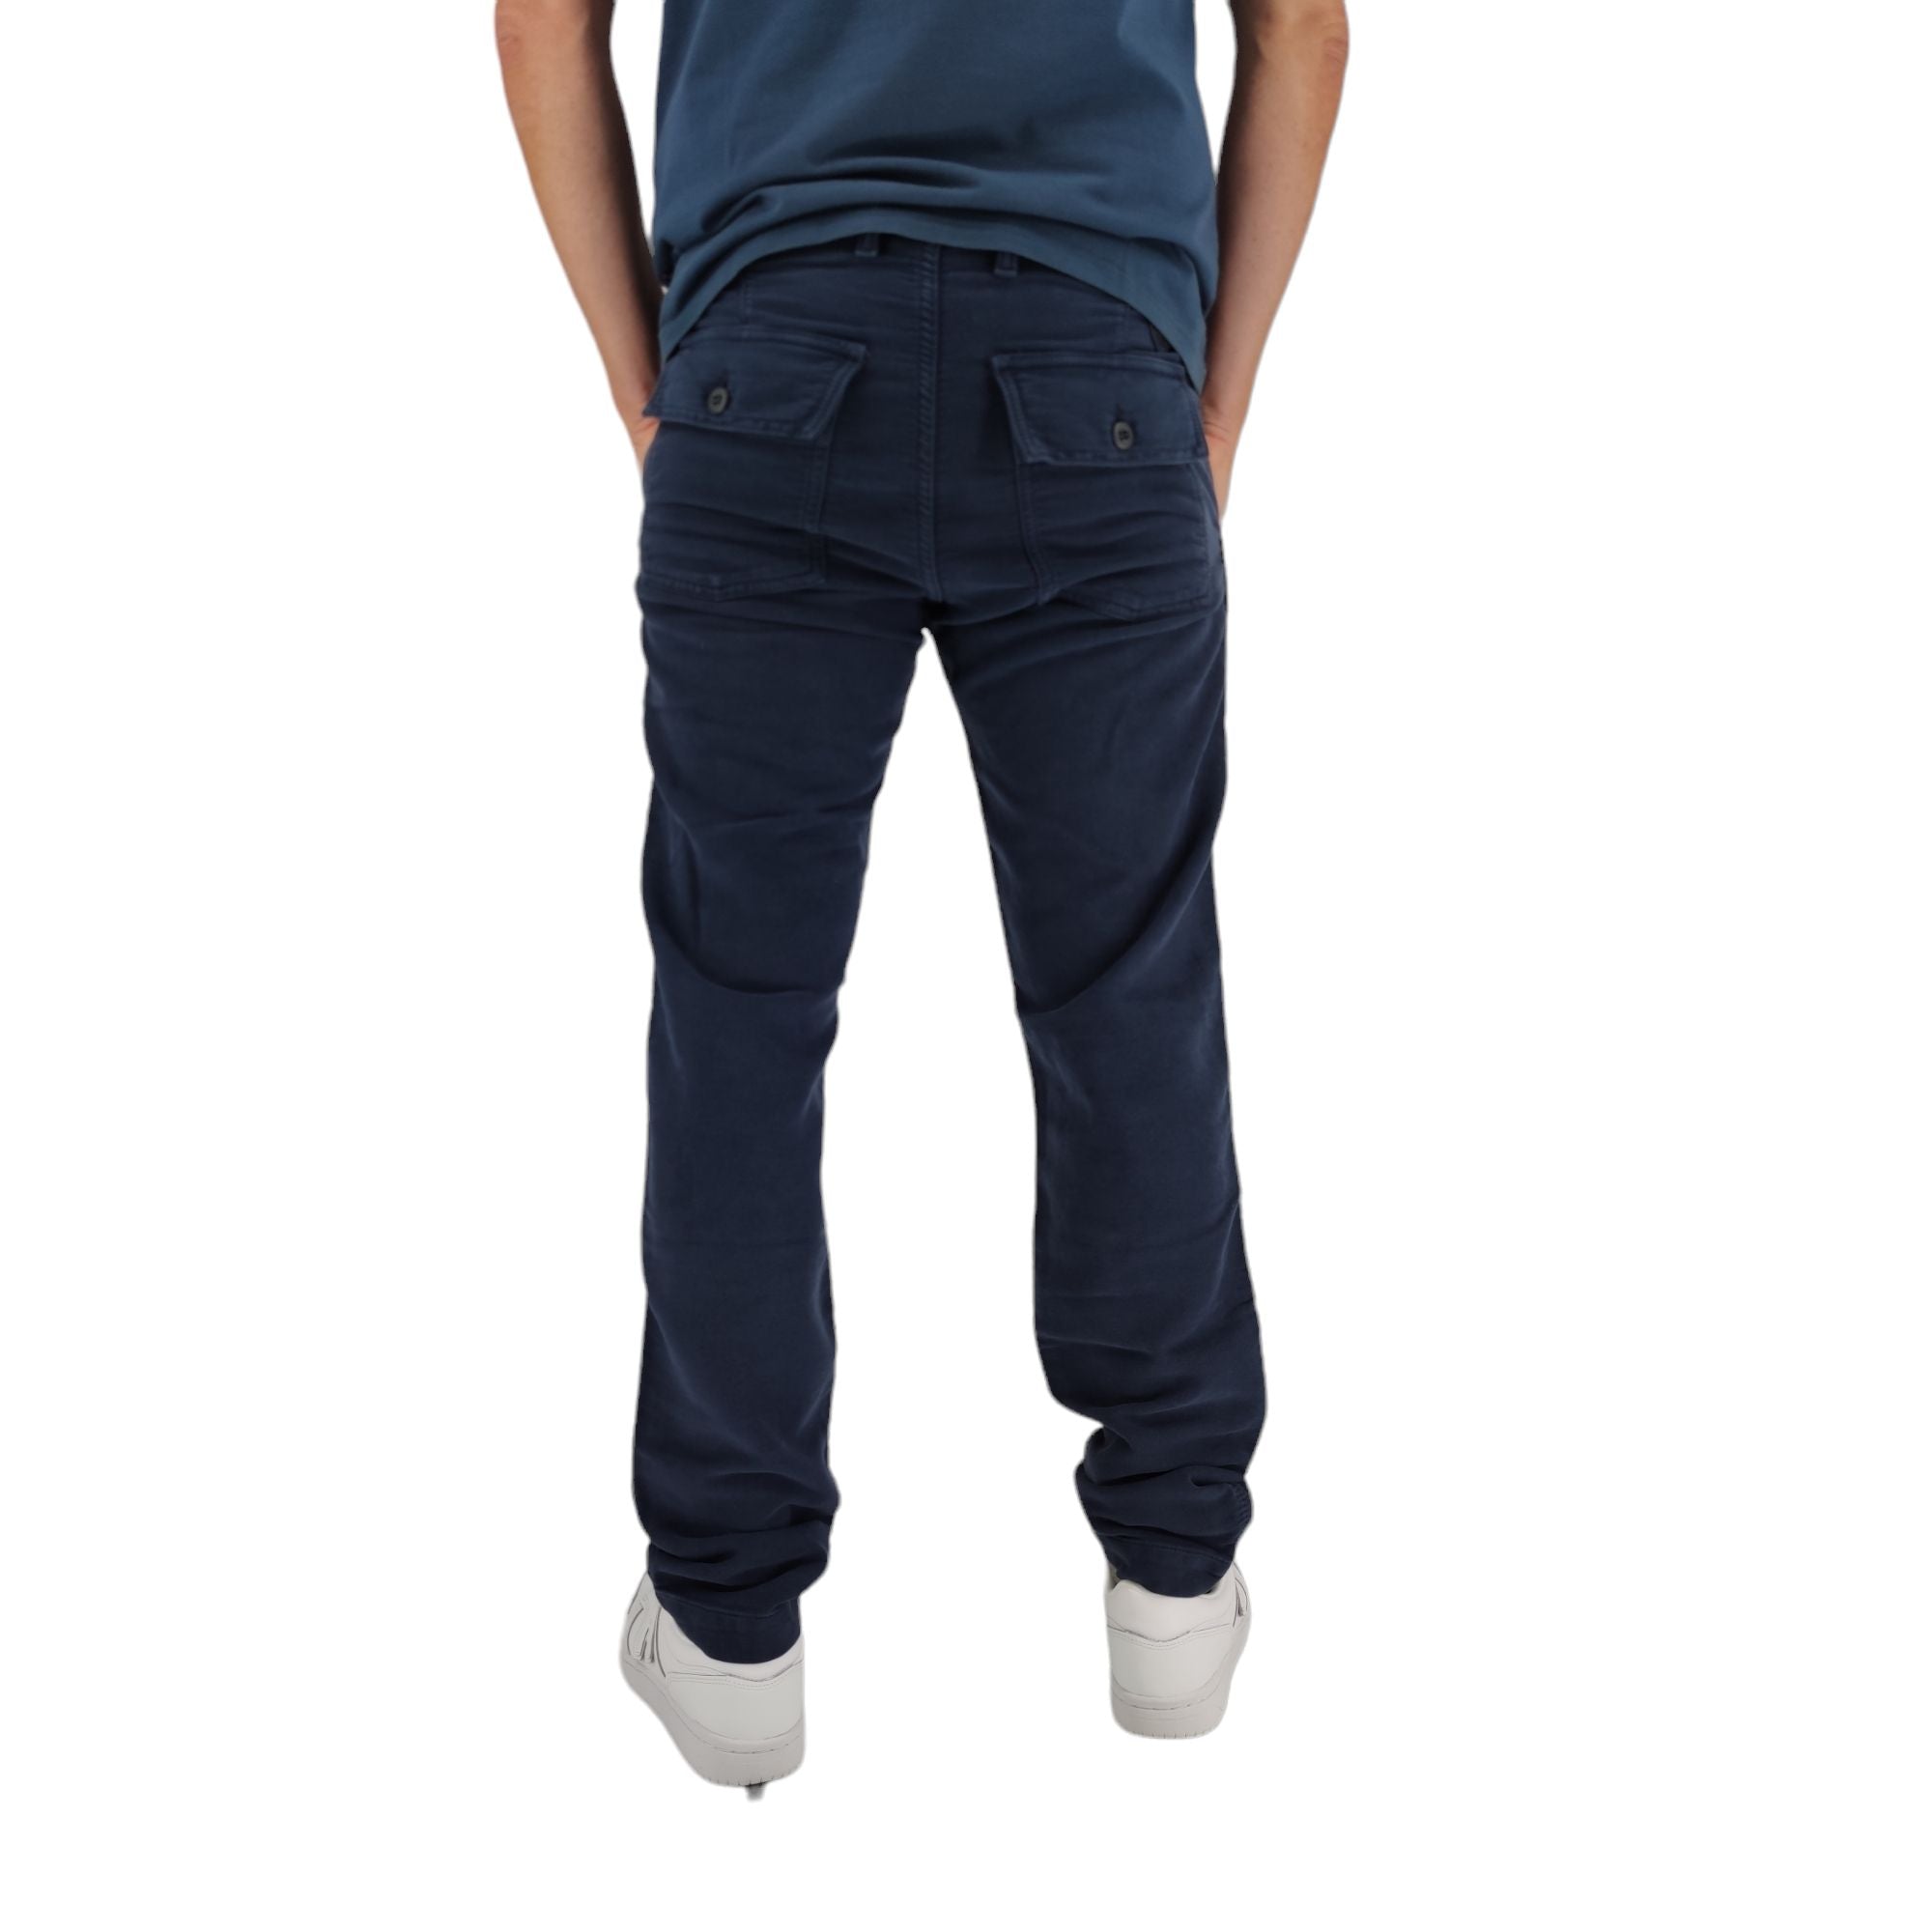 Men's Fatigue Degrasse Trousers Navy Blue 